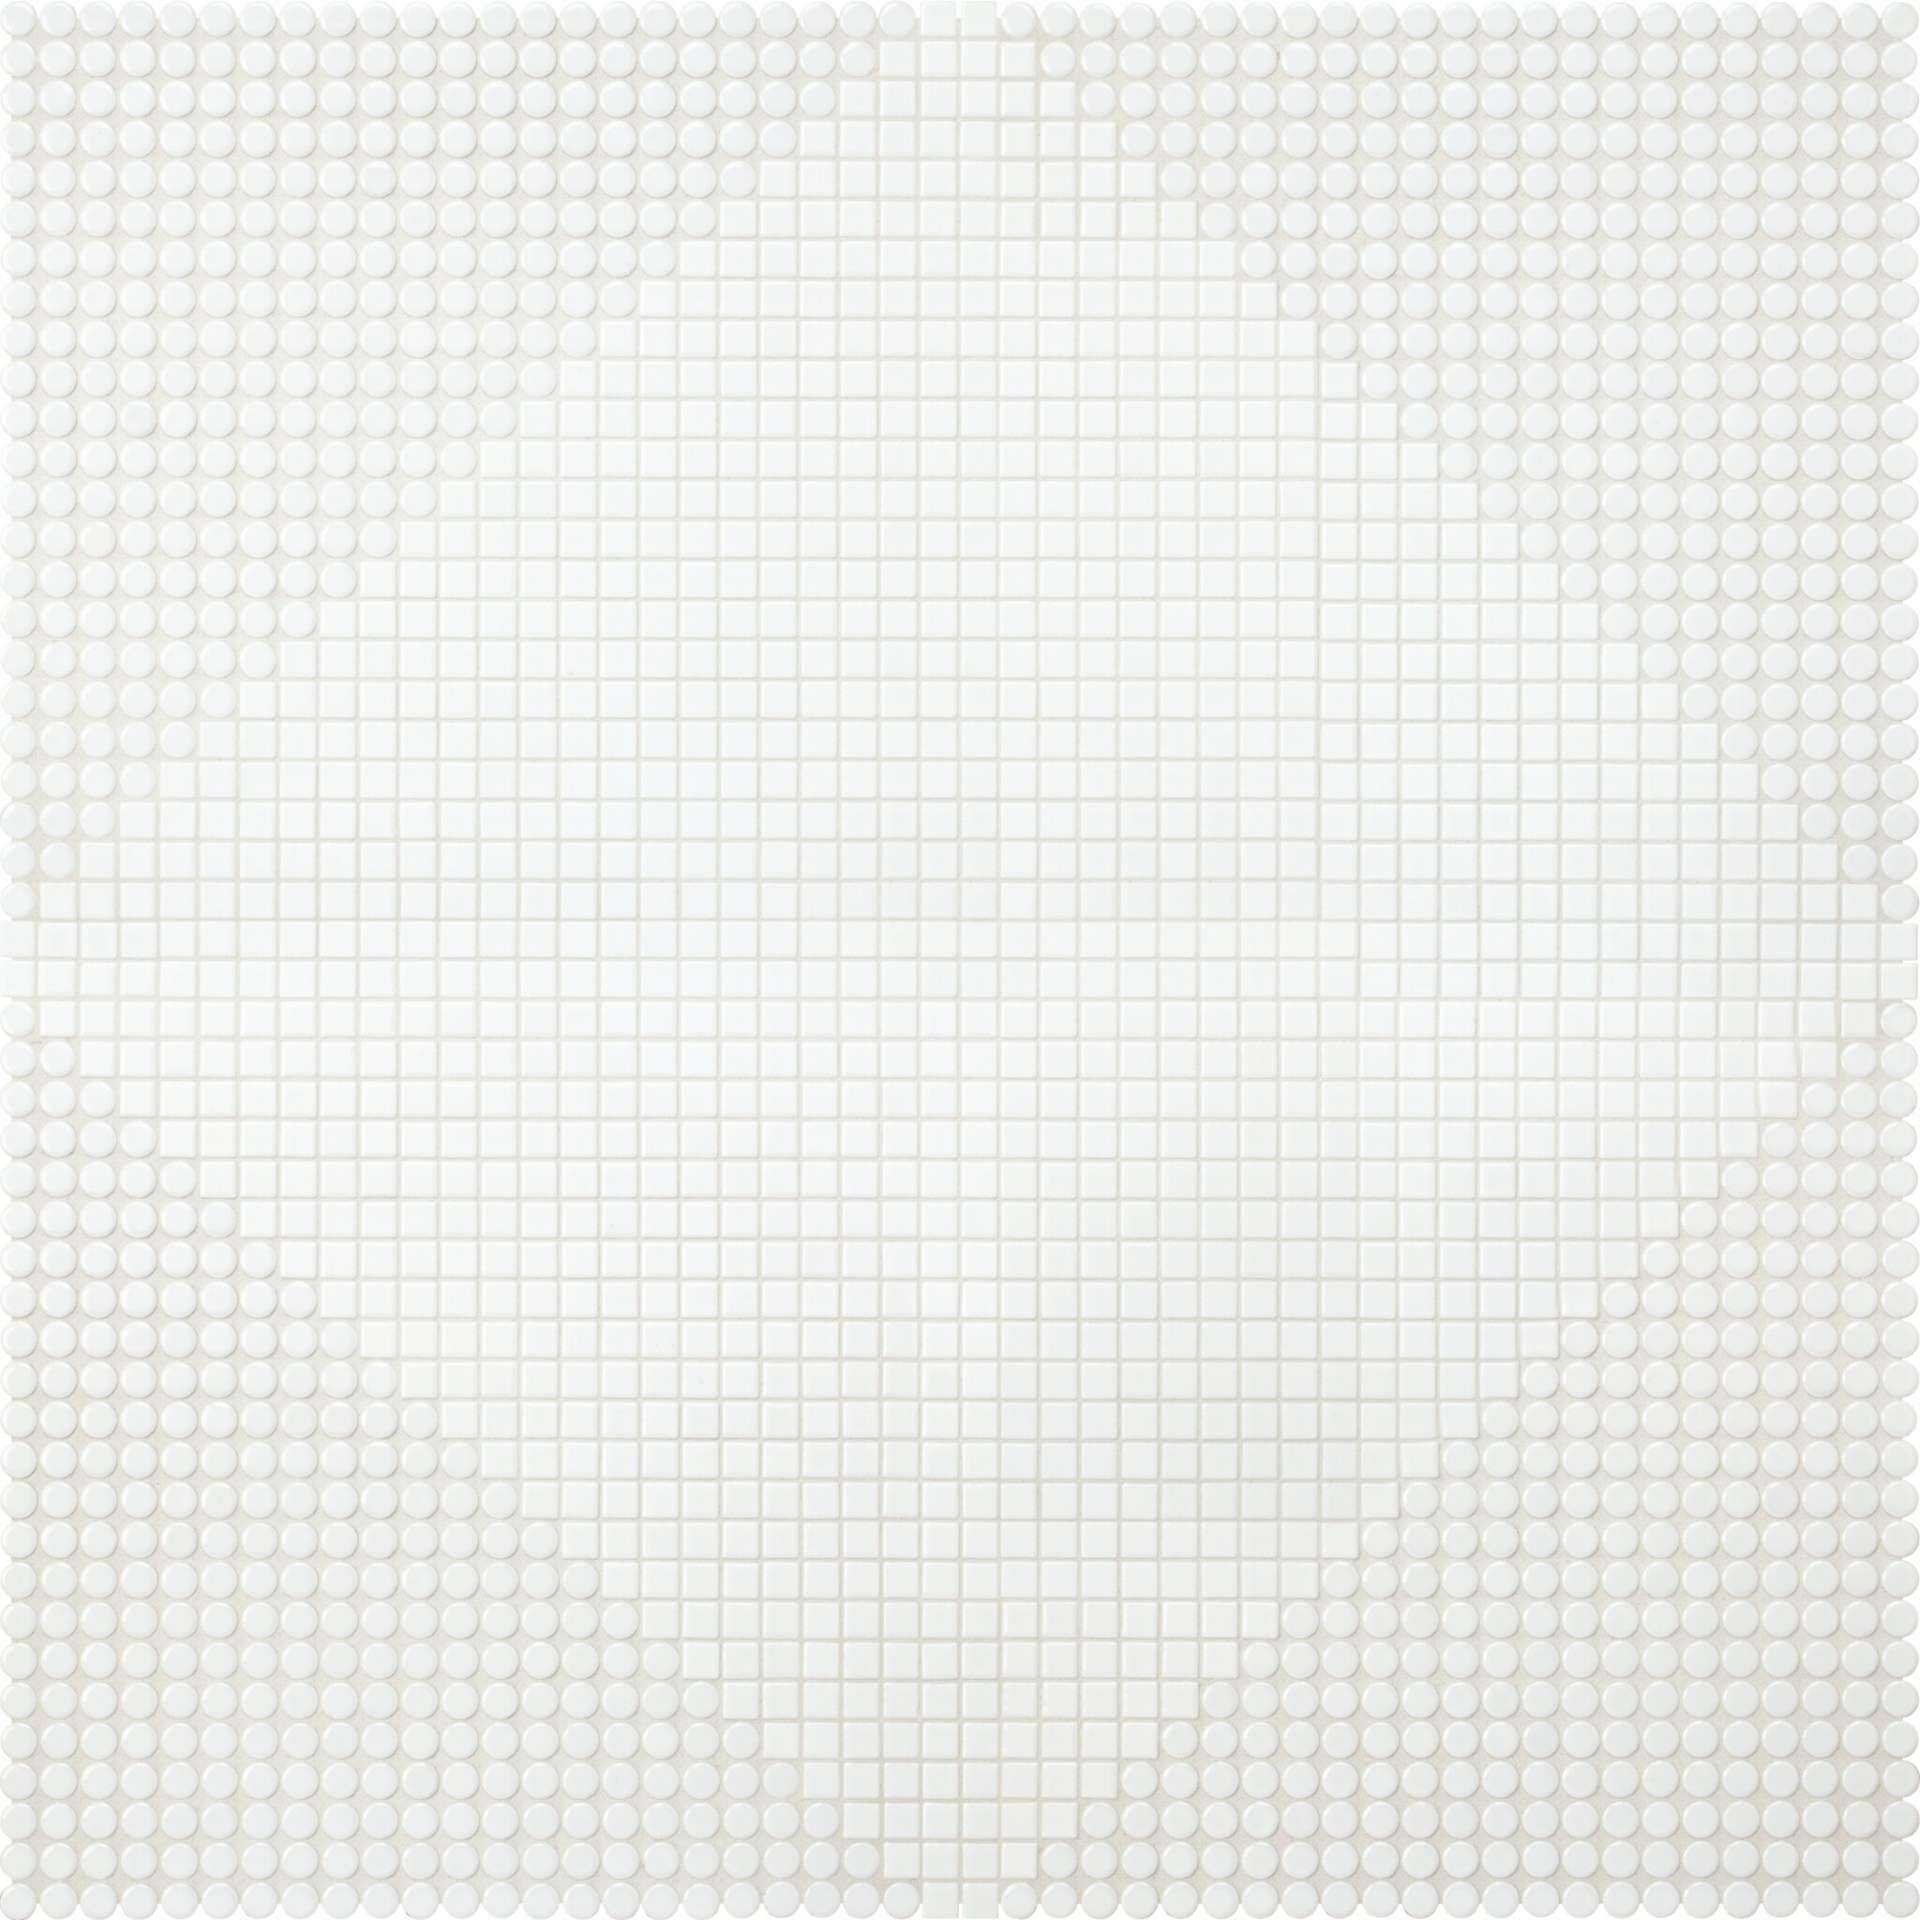 Мозаика Jasba Loop Arktiswei 40050H, цвет белый, поверхность глянцевая, круг и овал, 632x632